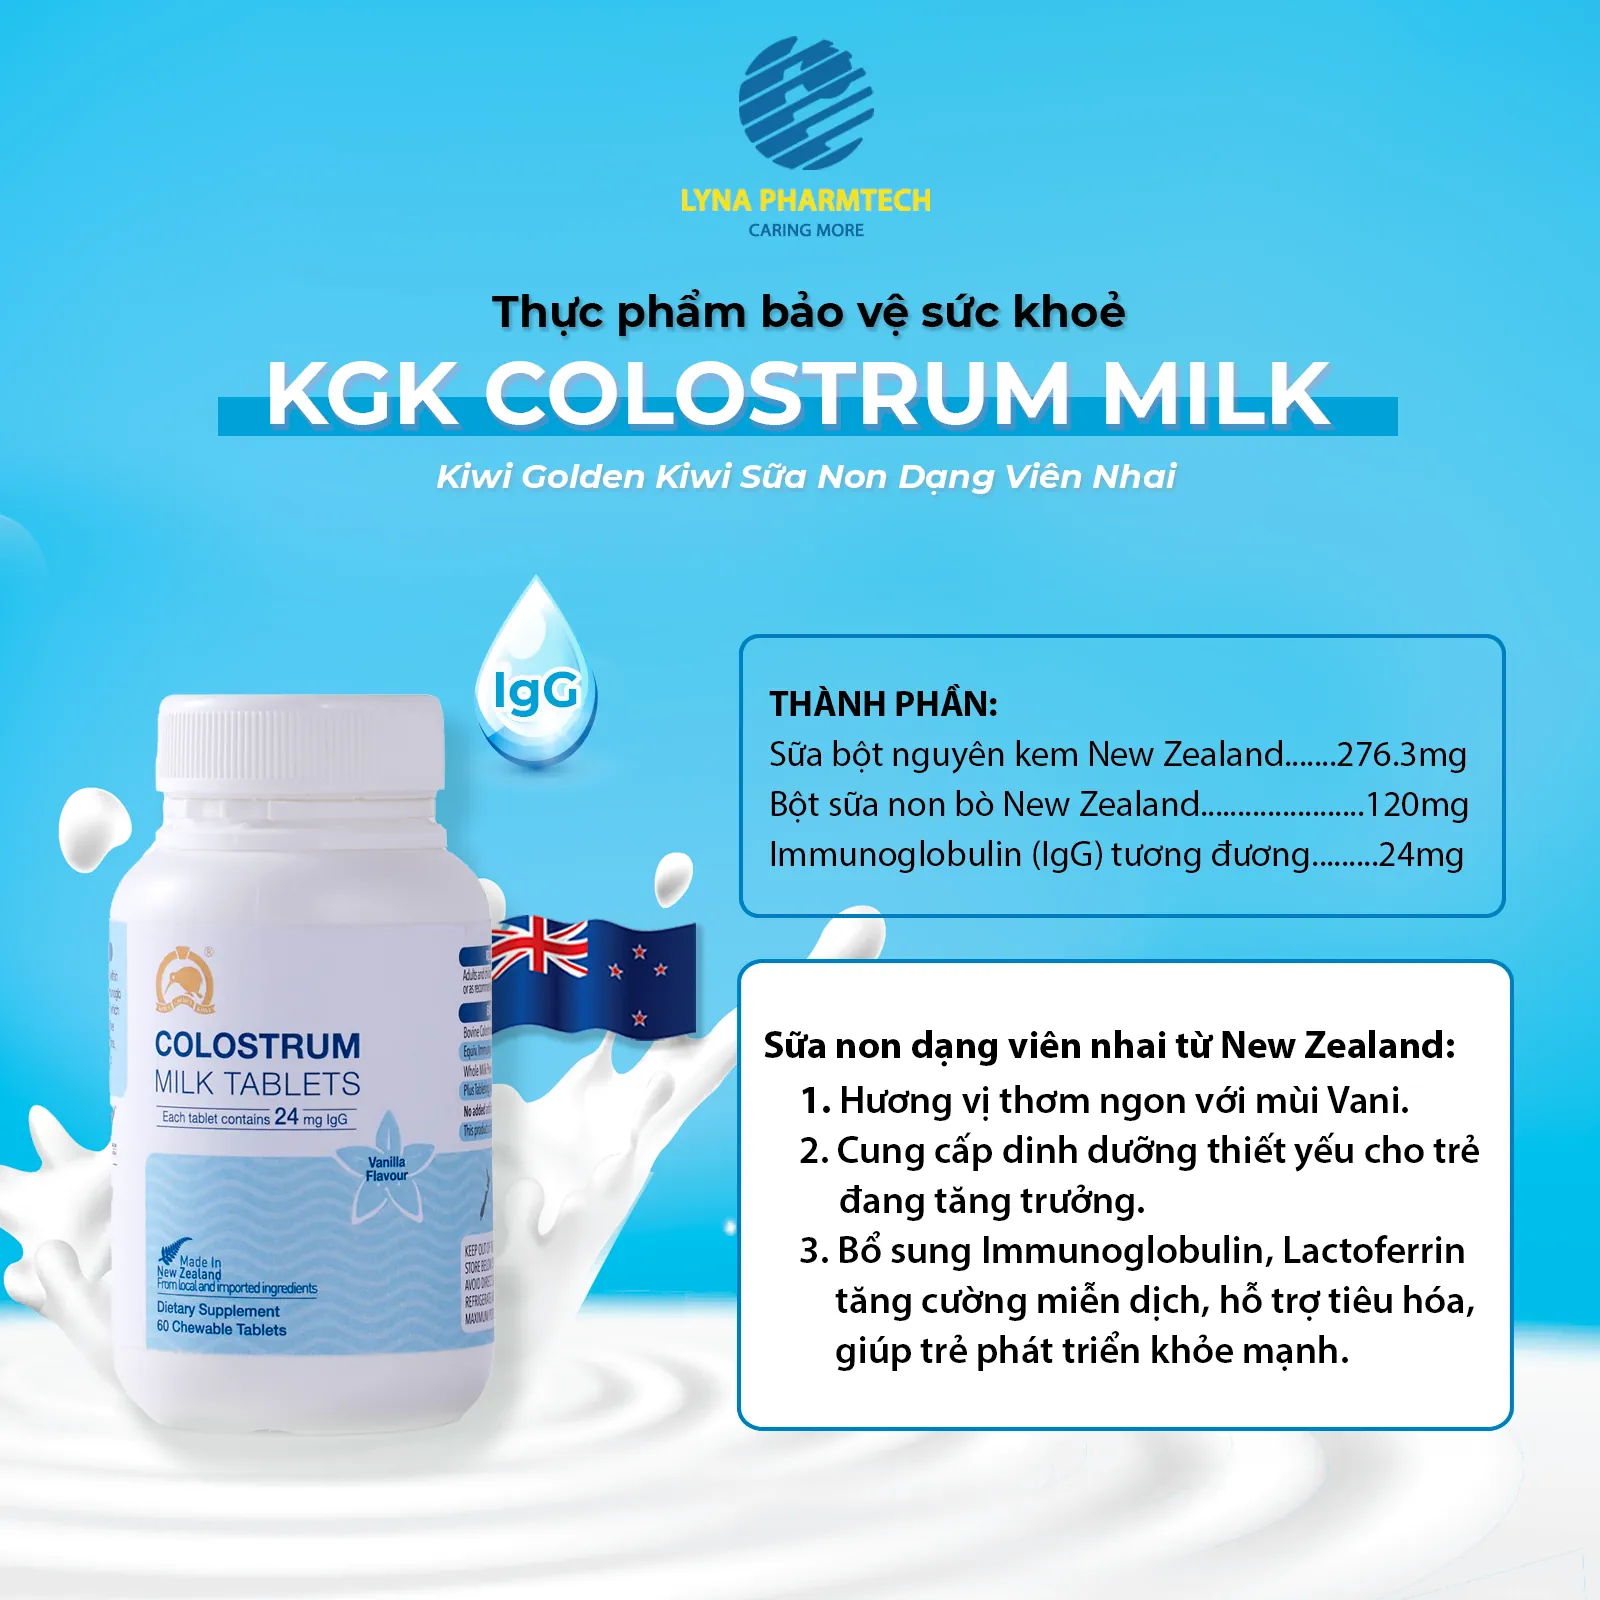 Viên nhai sữa non KGK Milk Colostrum vị vani - Lyna Pharmtech - Droppii Shops